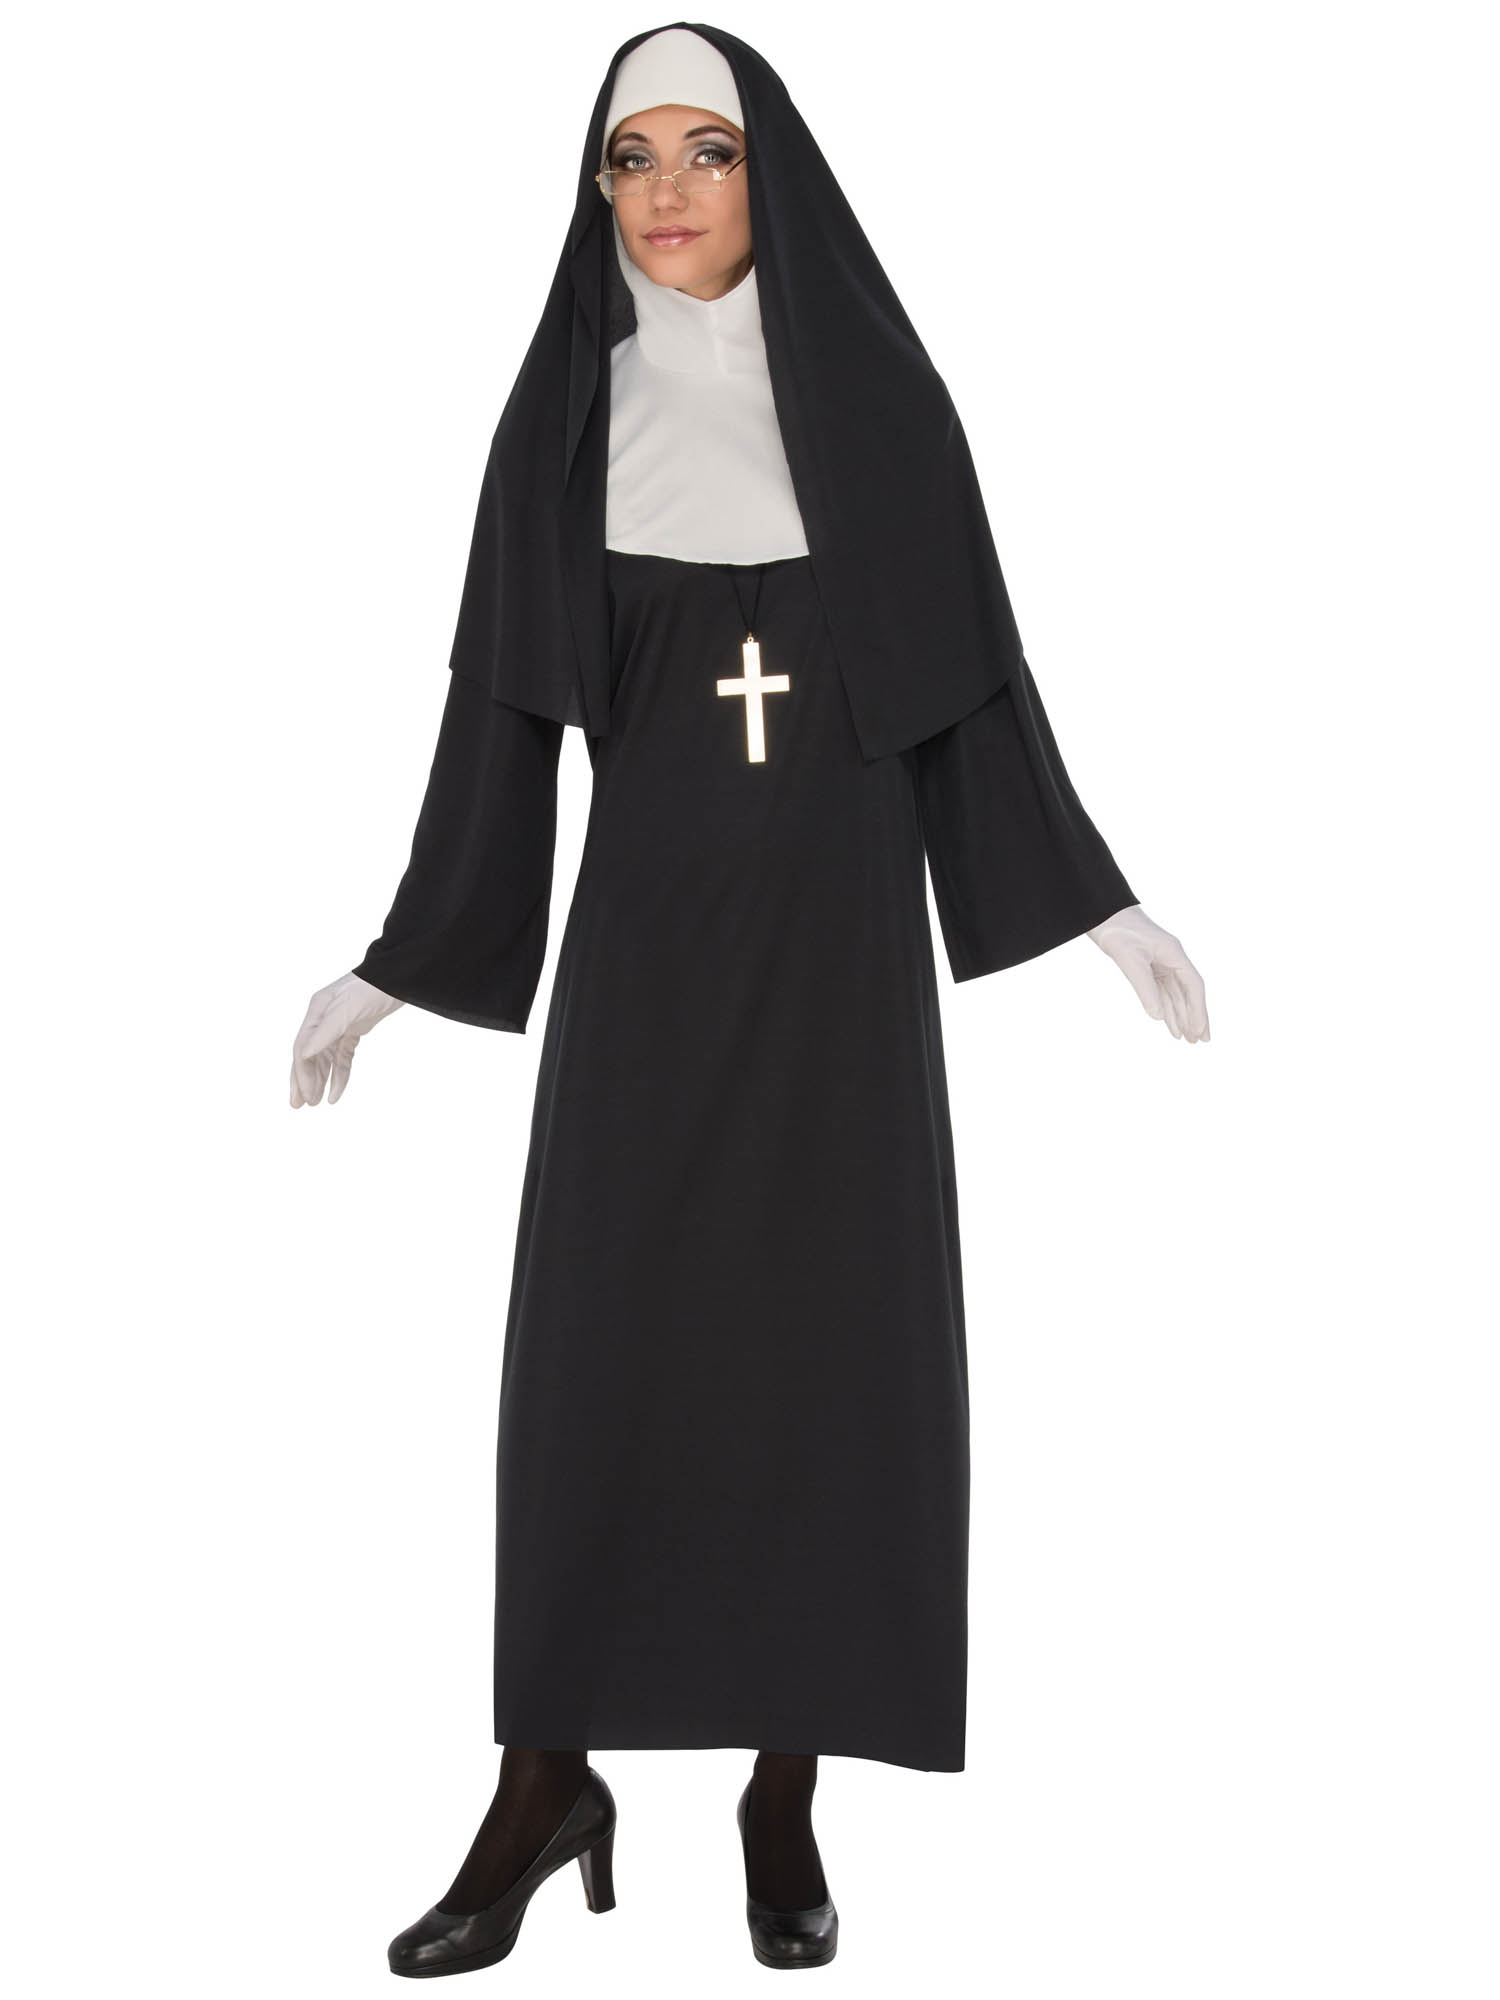 Rubie's Nun Womens Costume - image 1 of 2